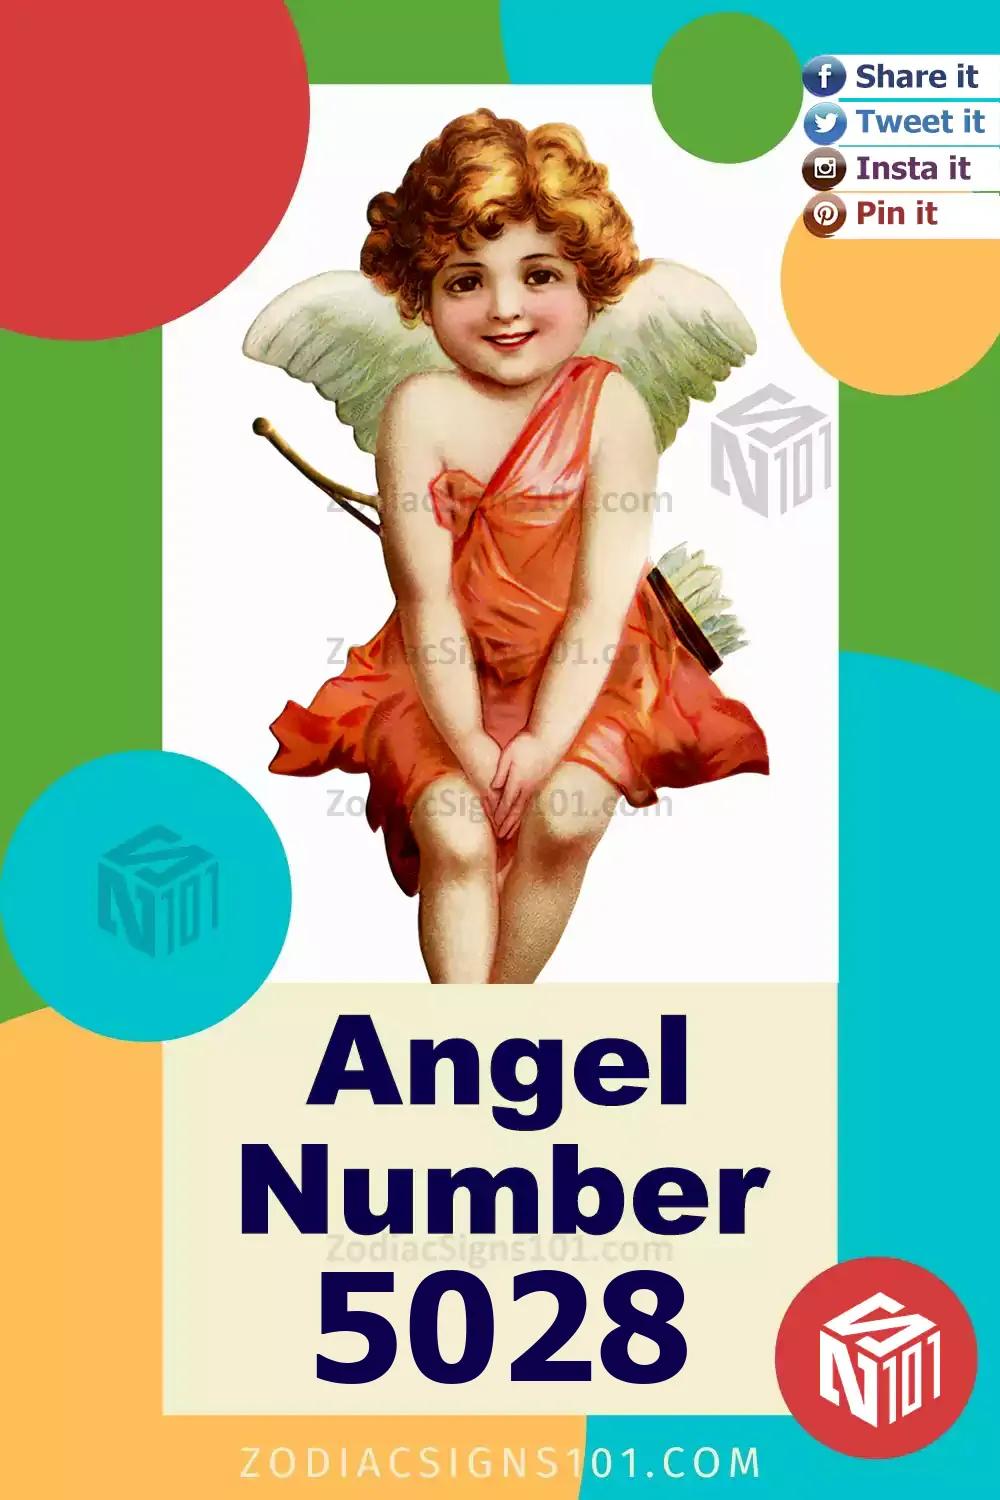 5028-Angel-Number-Meaning.jpg